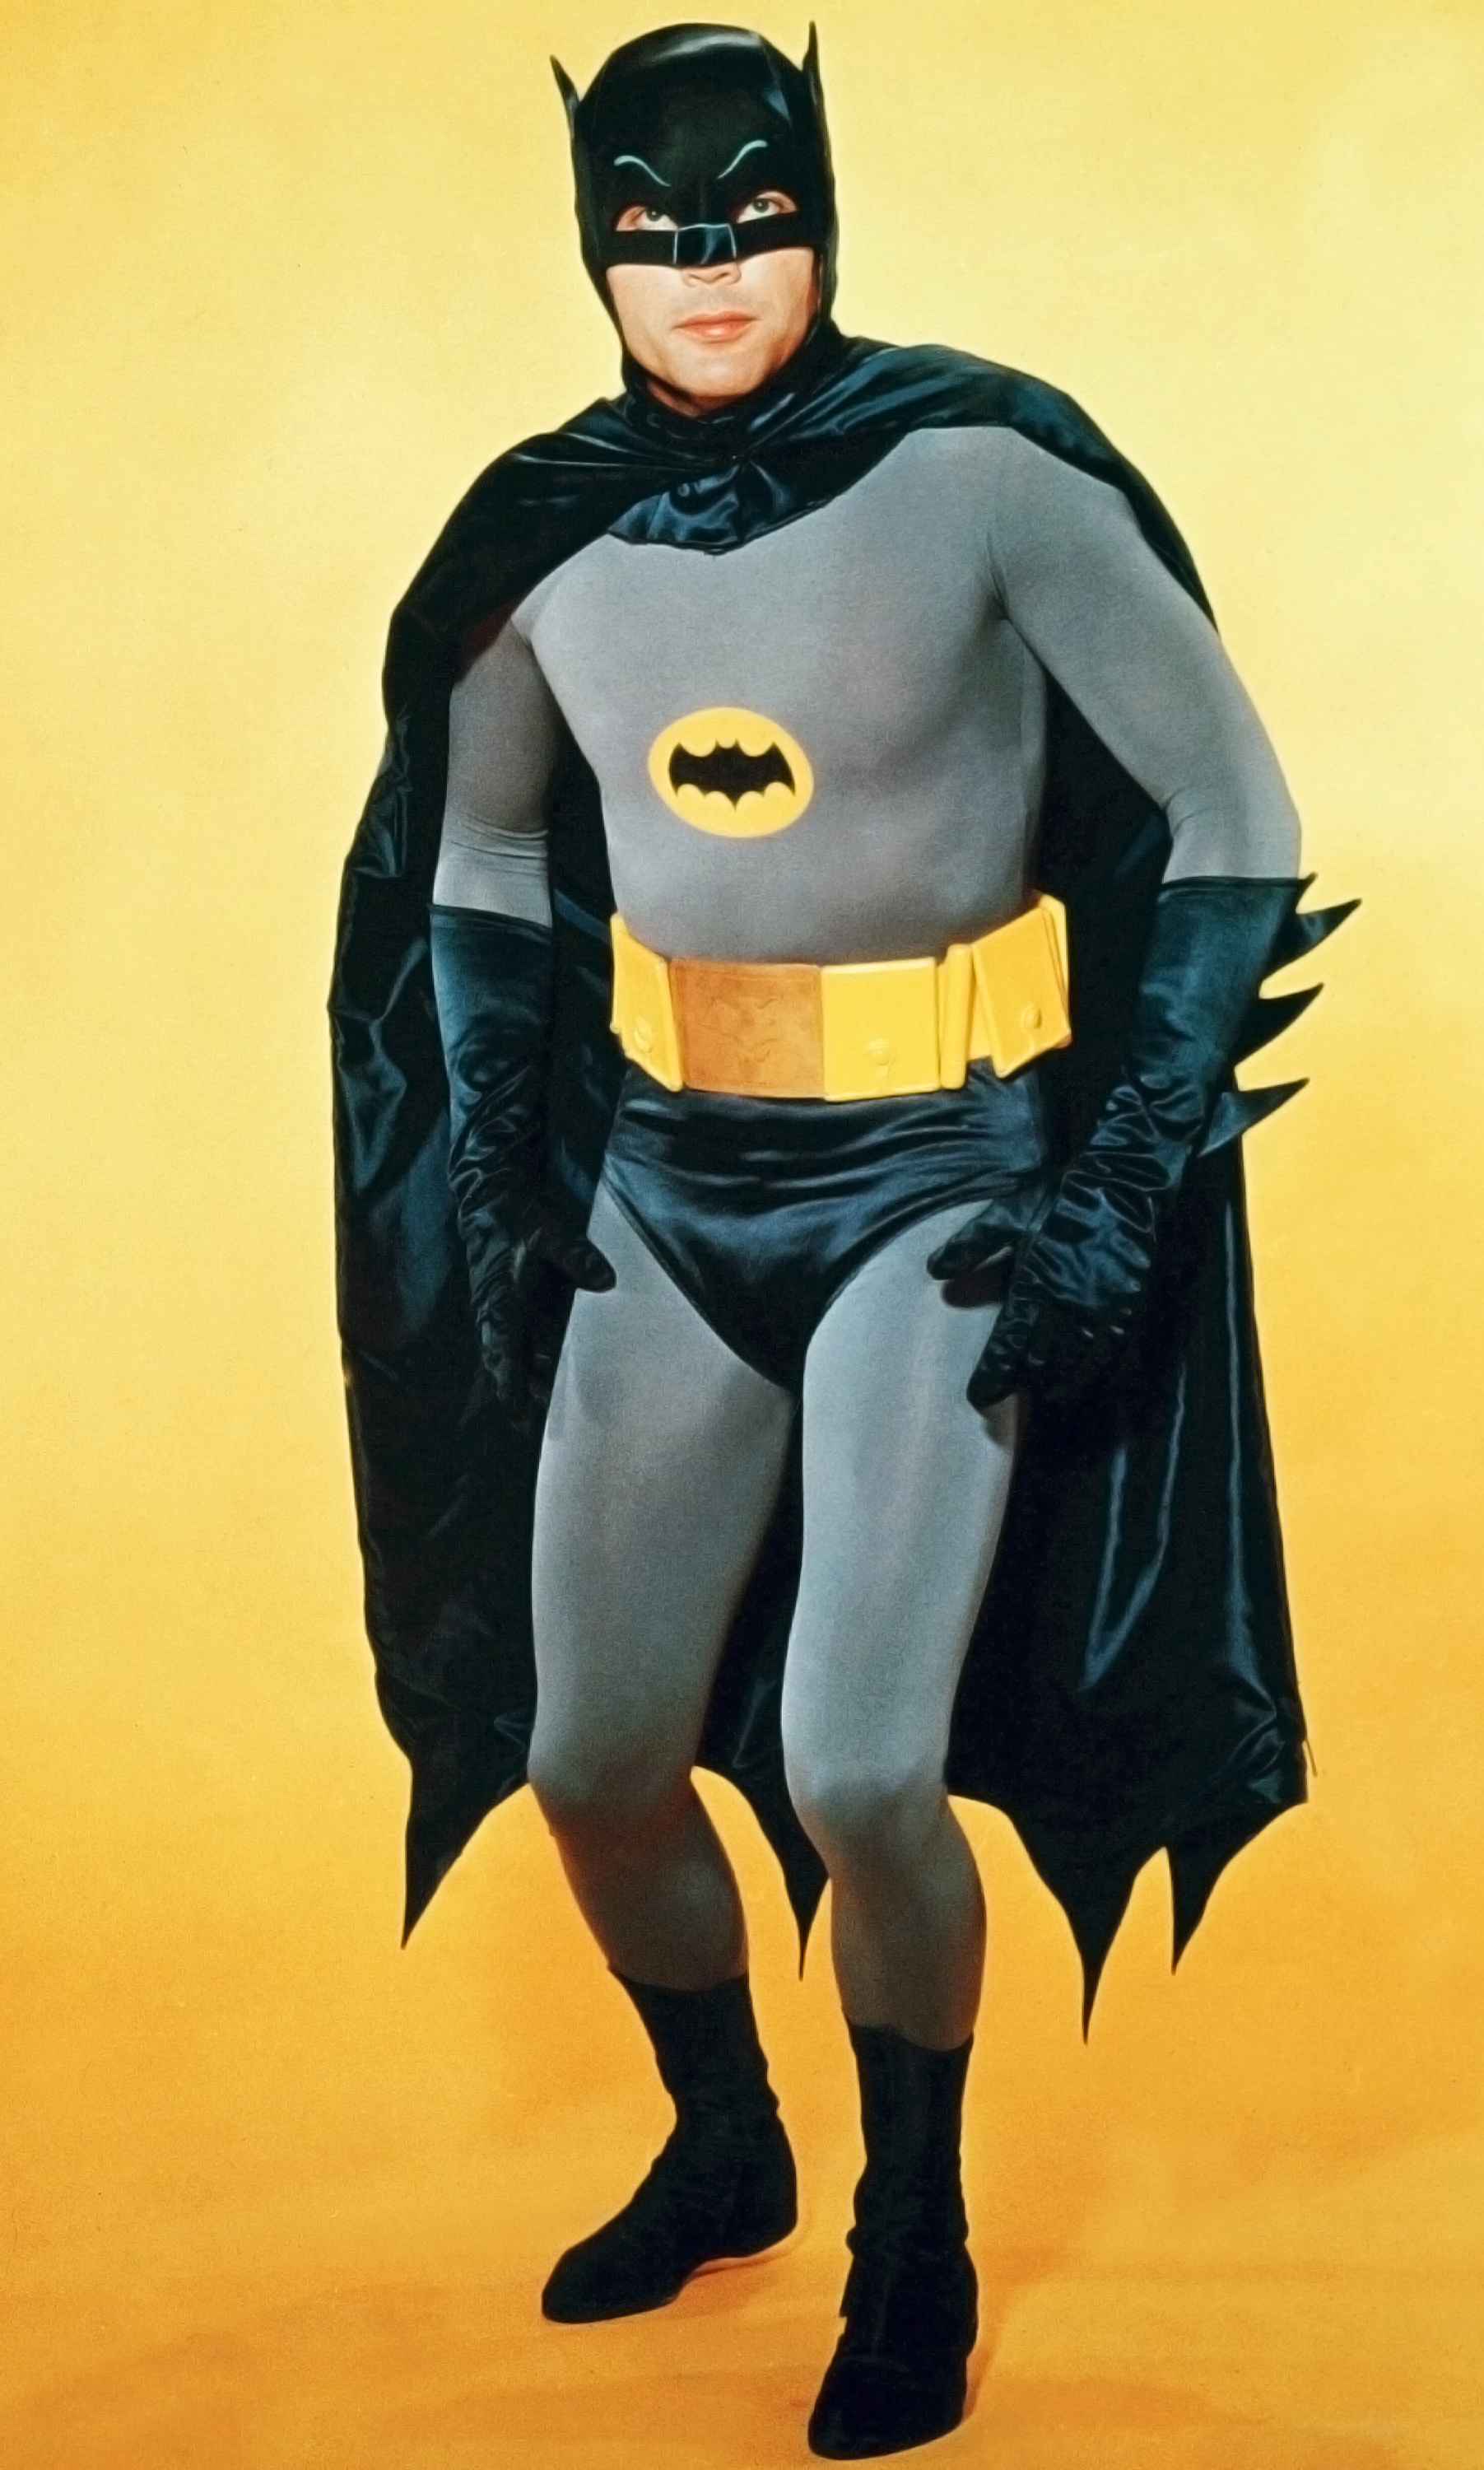 Adam West in the television series Batman in 1966.